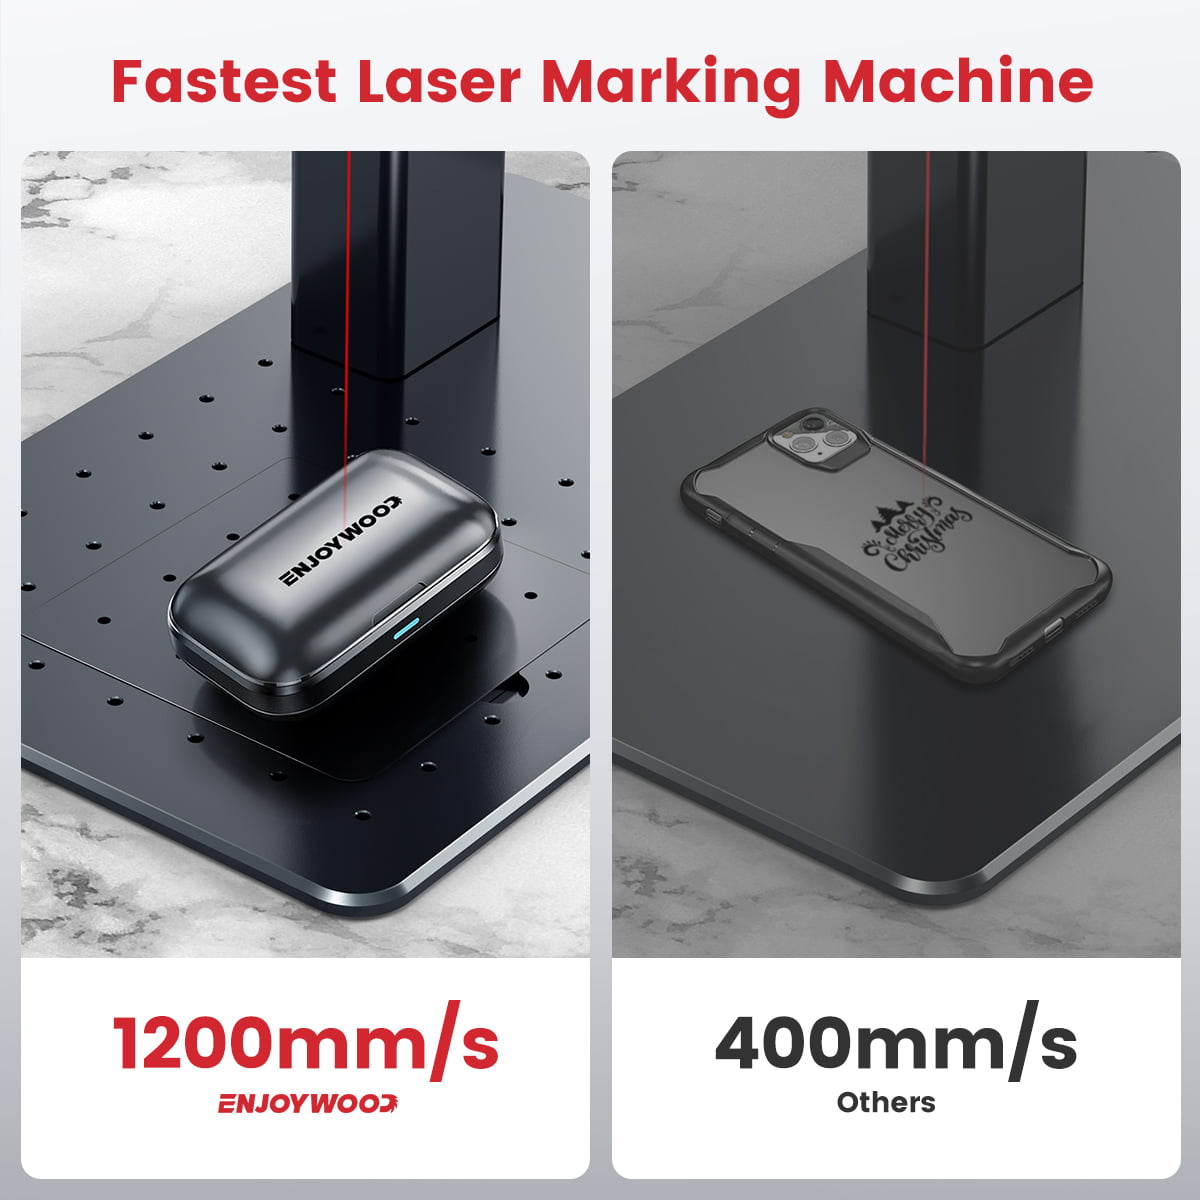 ENJOYWOOD ENJOYWOOD M4 Fiber Laser Engraver 12m/s Fastest High Accuracy Desktop Handheld 2 in 1 Fiber Laser Marking Machine for All Metal ABS